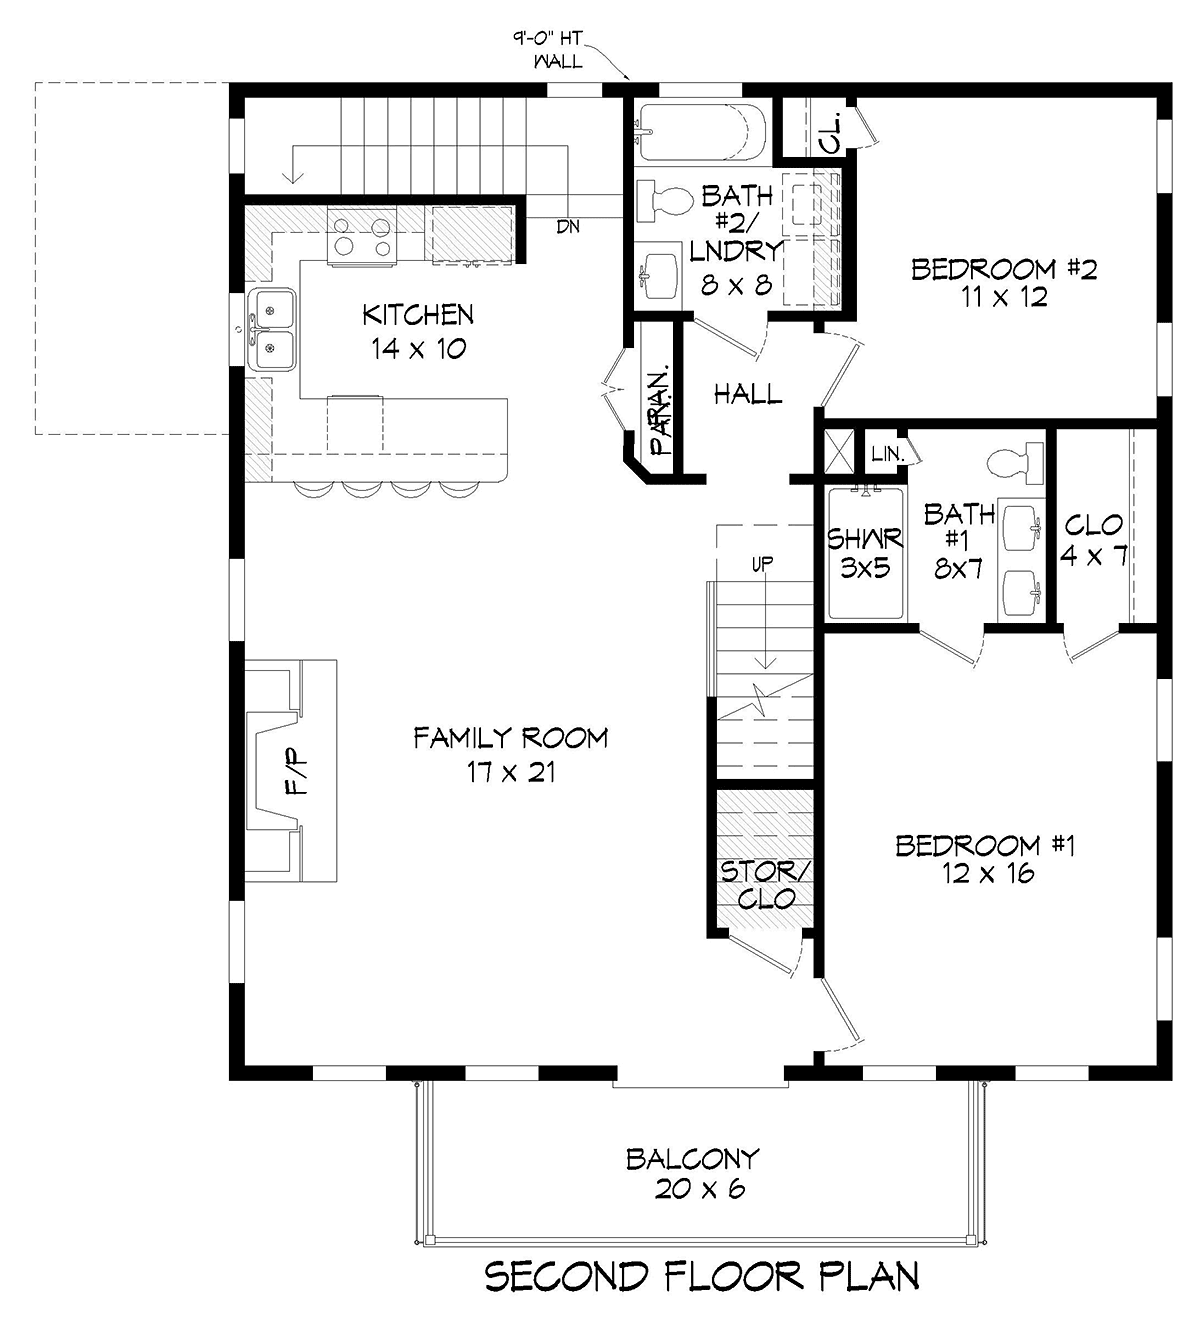 Coastal, Contemporary, Modern Garage-Living Plan 80979 with 3 Bed, 4 Bath, 2 Car Garage Level Two